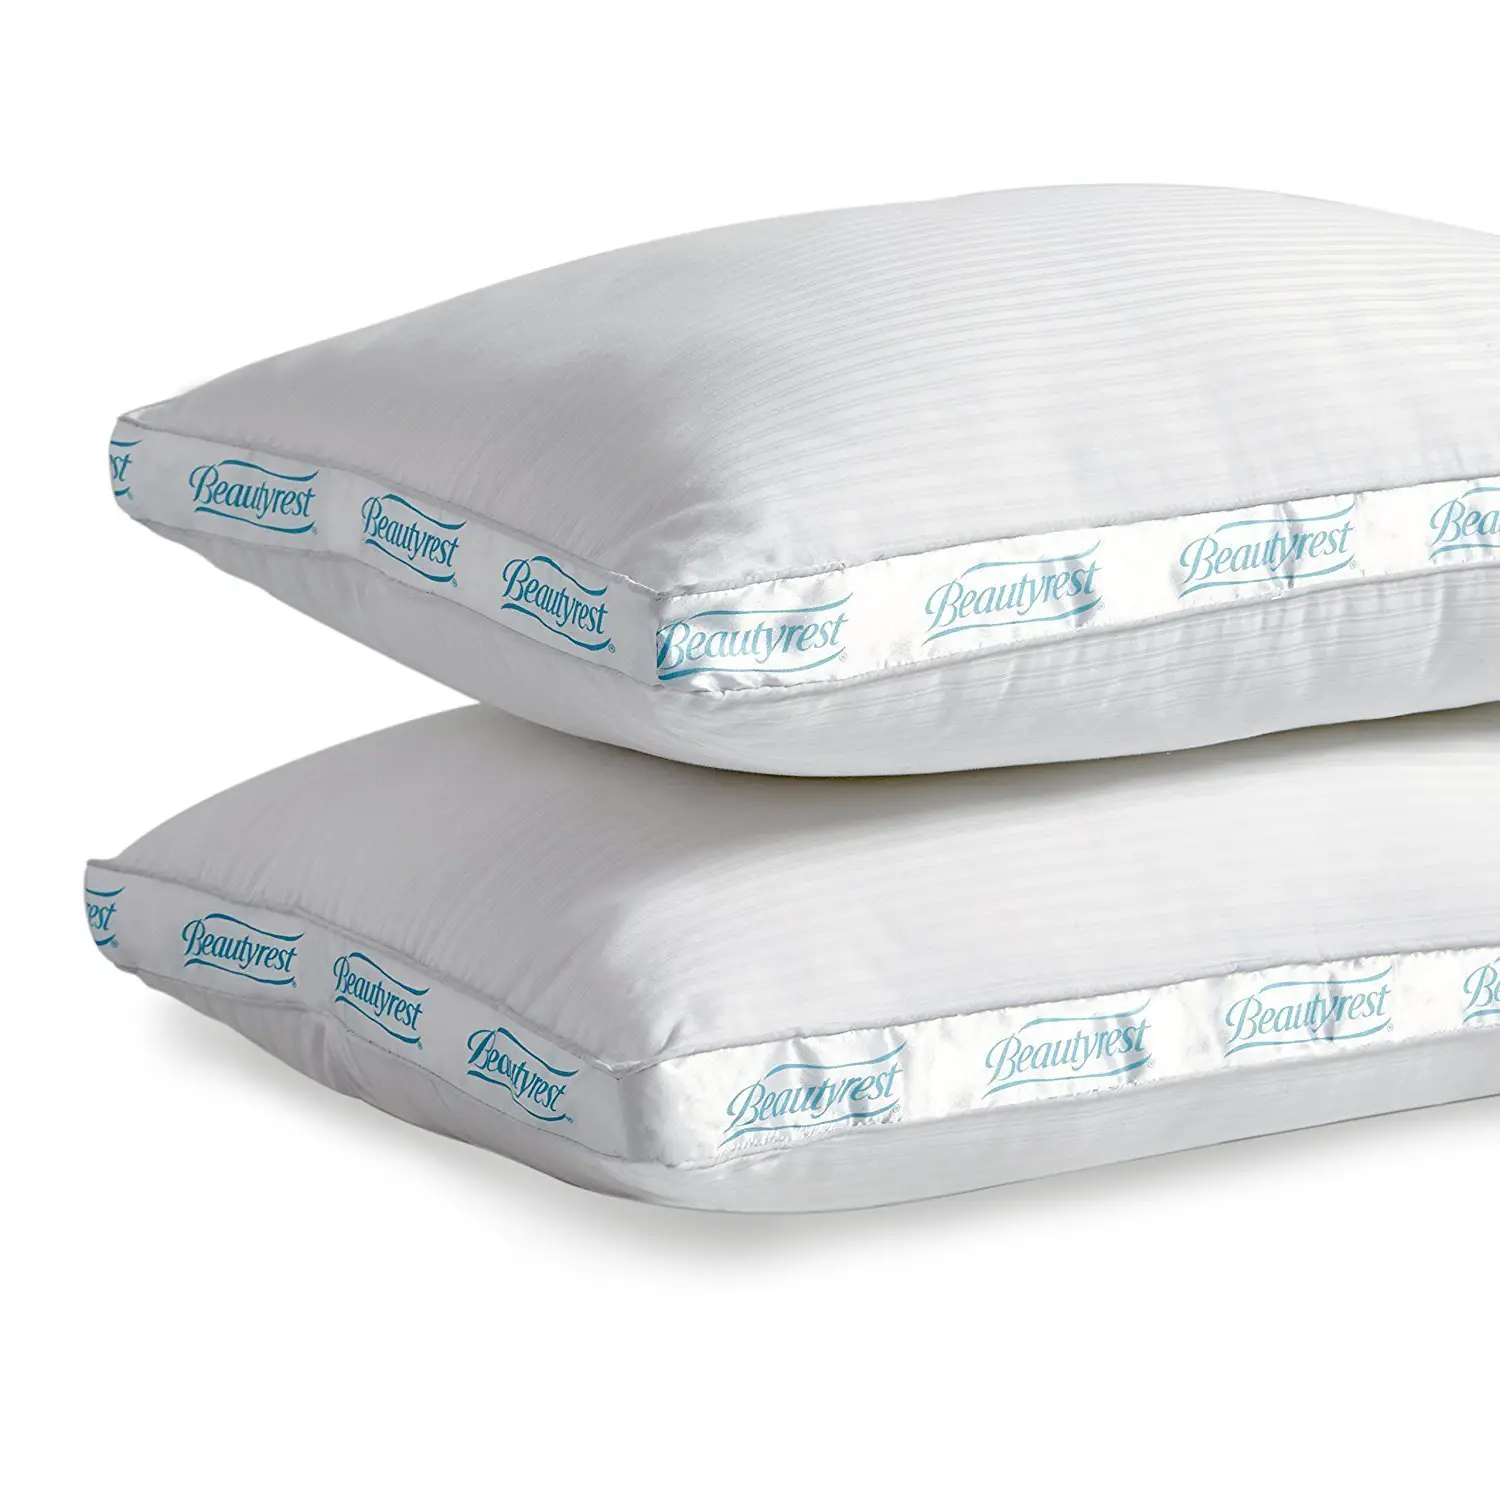 Beautyrest Extra Firm Pillow for Back Side Sleeper